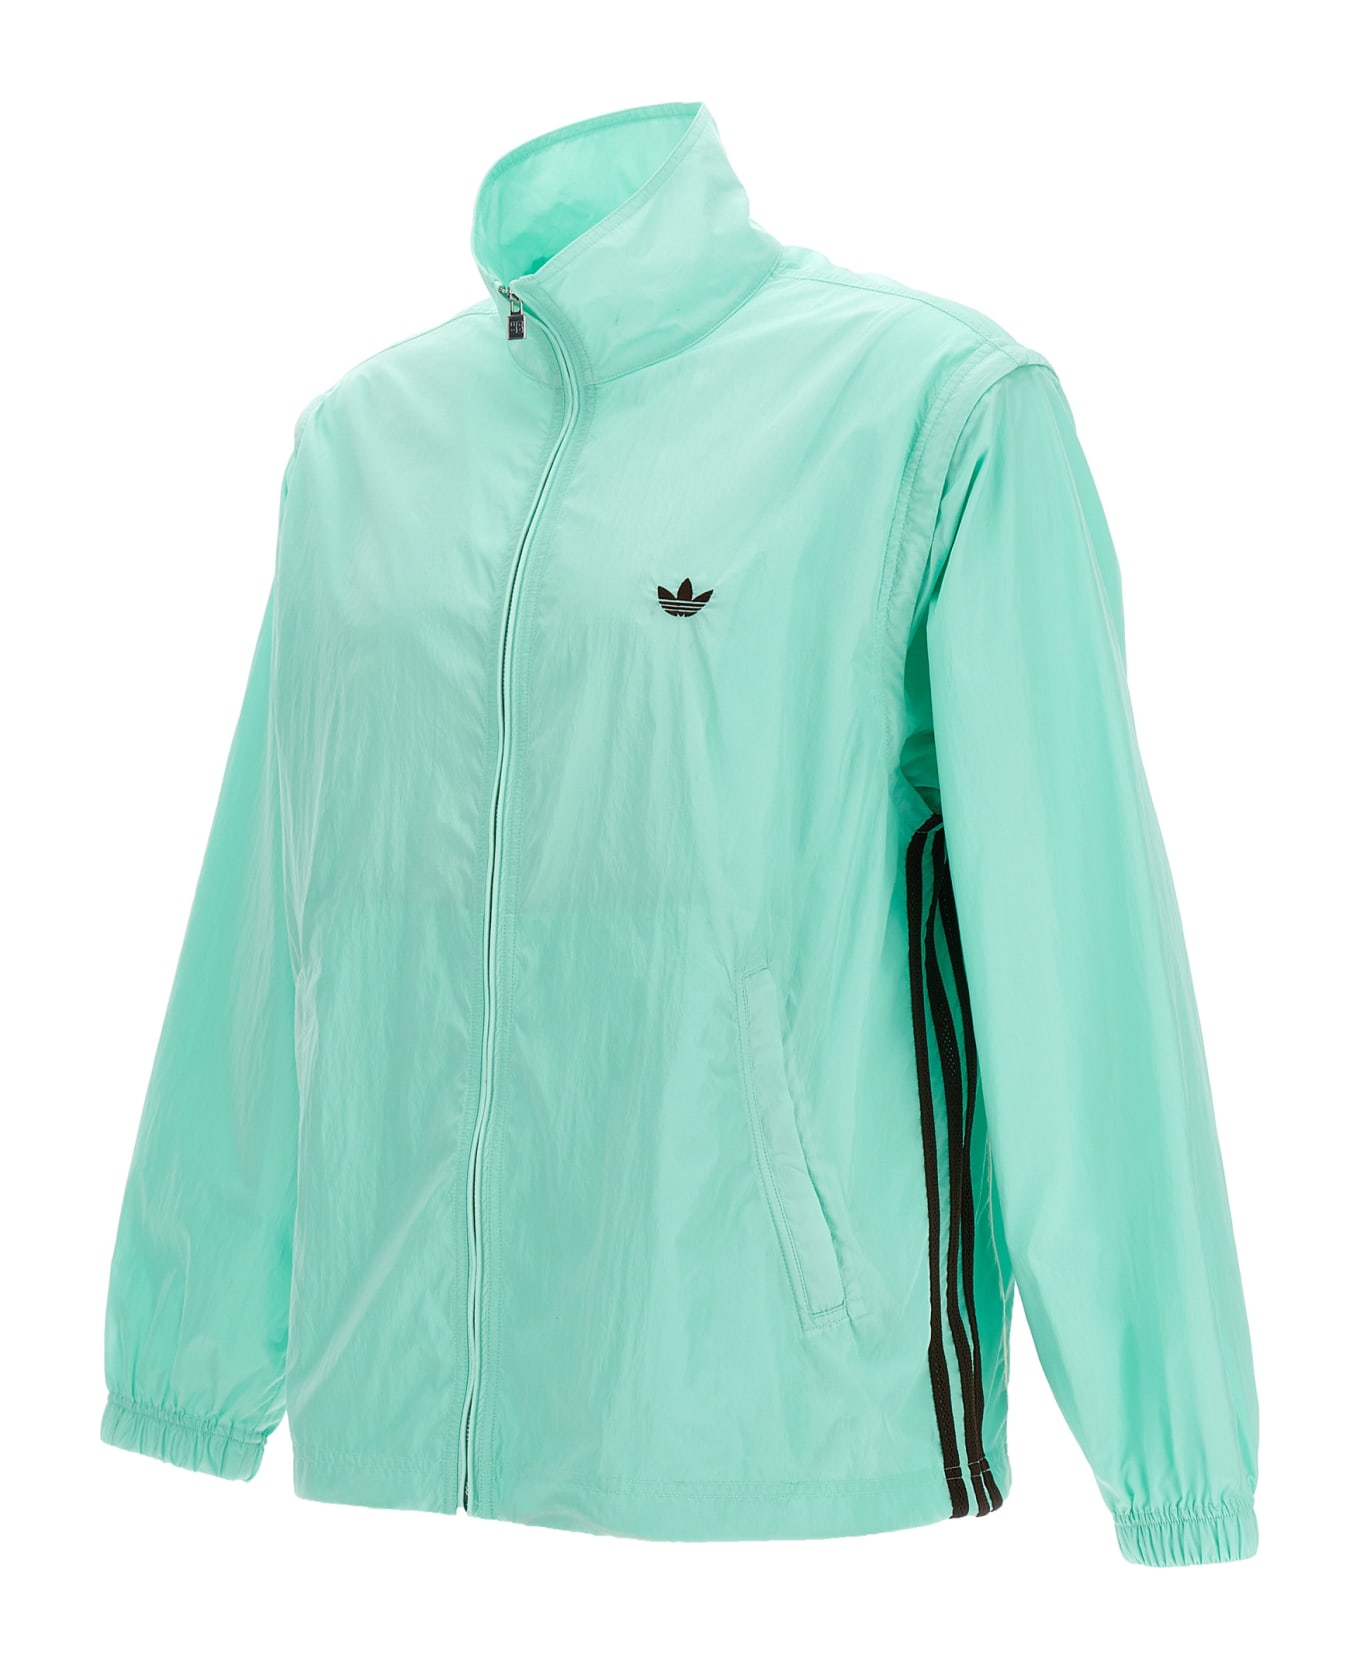 Adidas Originals X Wales Bonner '1988 Nylon Anorak' Jacket - Green